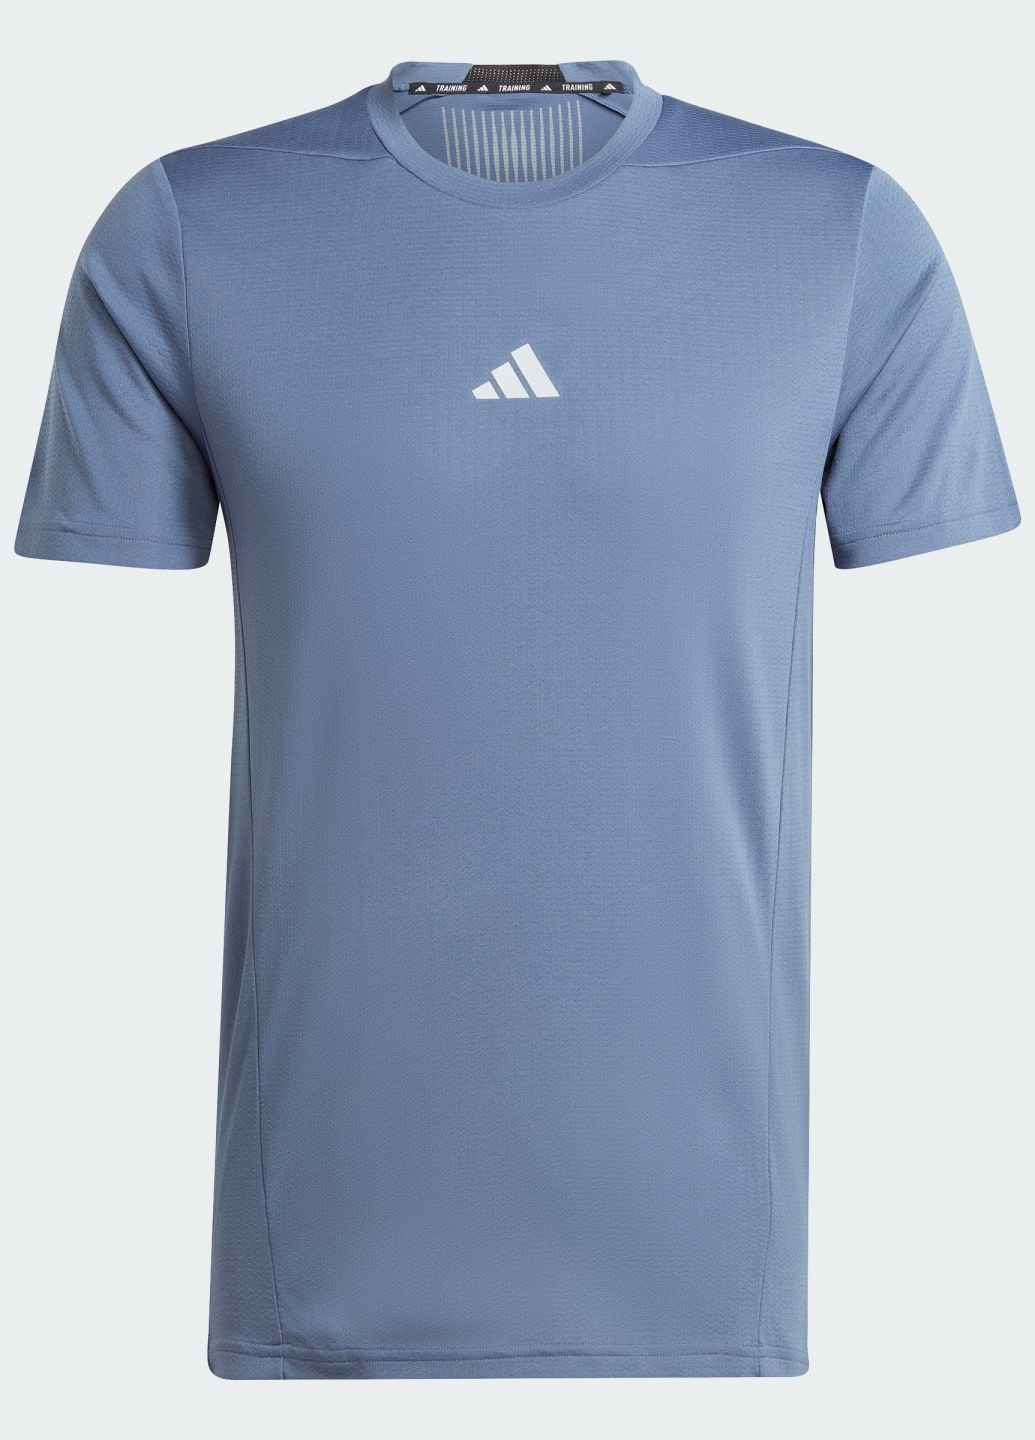 Синя футболка designed for training hiit workout heat.rdy adidas